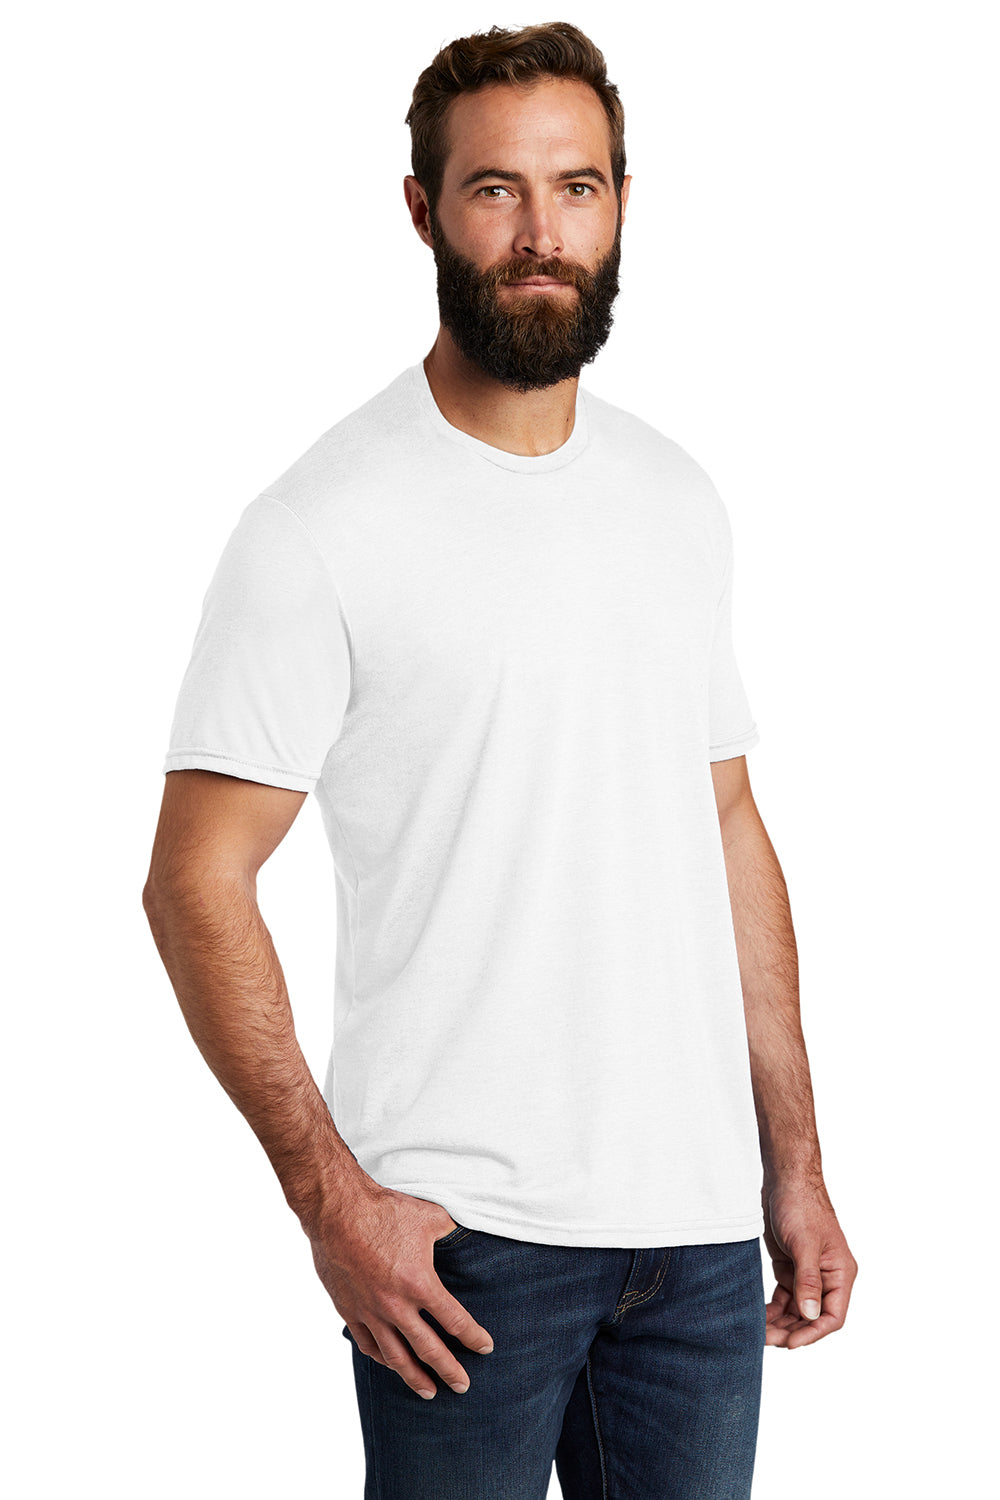 Allmade AL2004 Mens Short Sleeve Crewneck T-Shirt Bright White Model 3Q